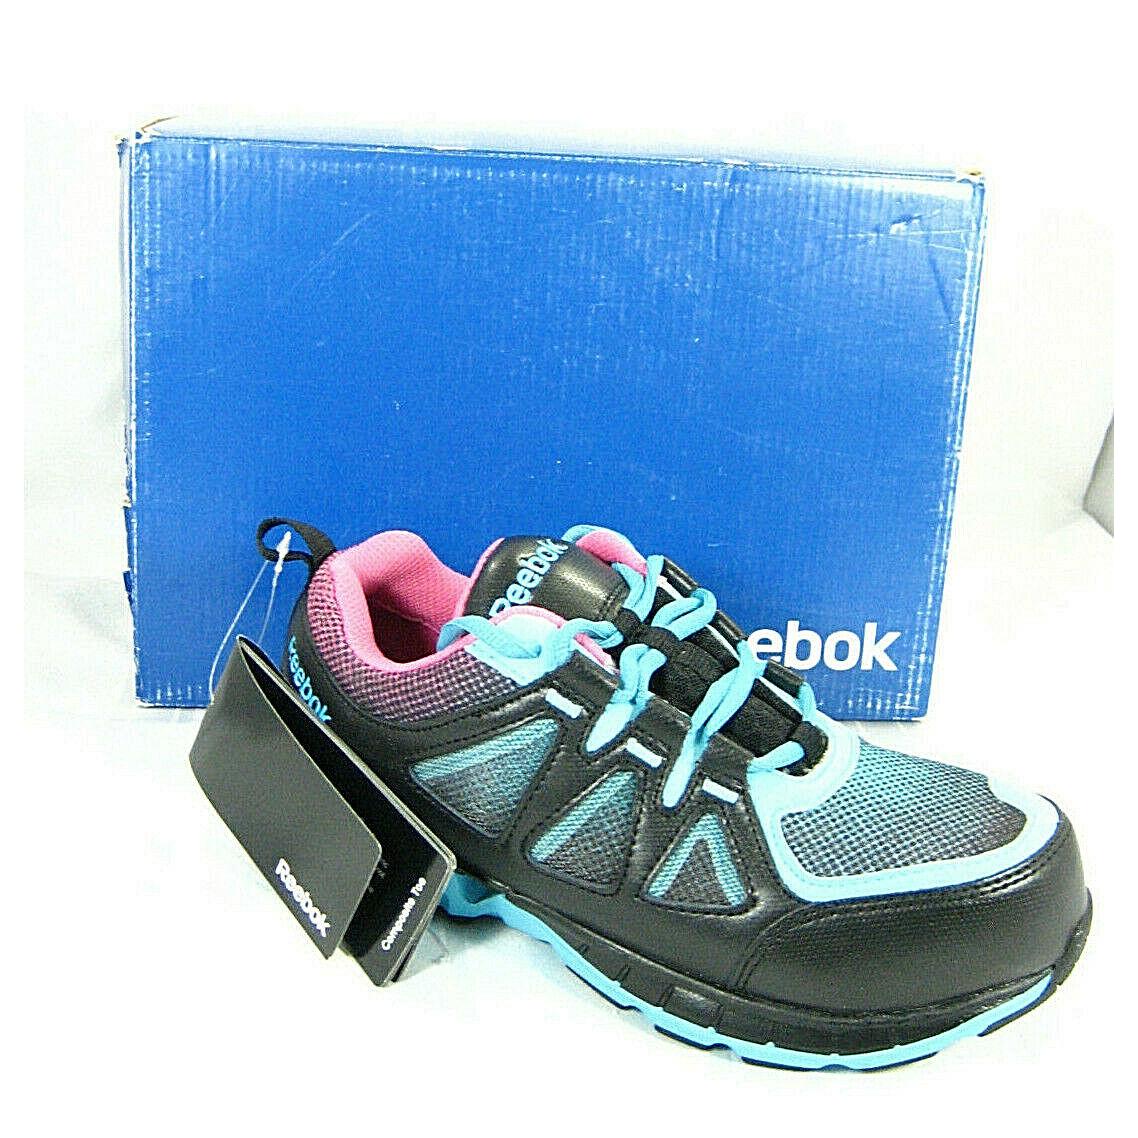 Reebok Womens Black Athletic Composite Toe Work Hiking Shoe 10 M RB325 Zigkick